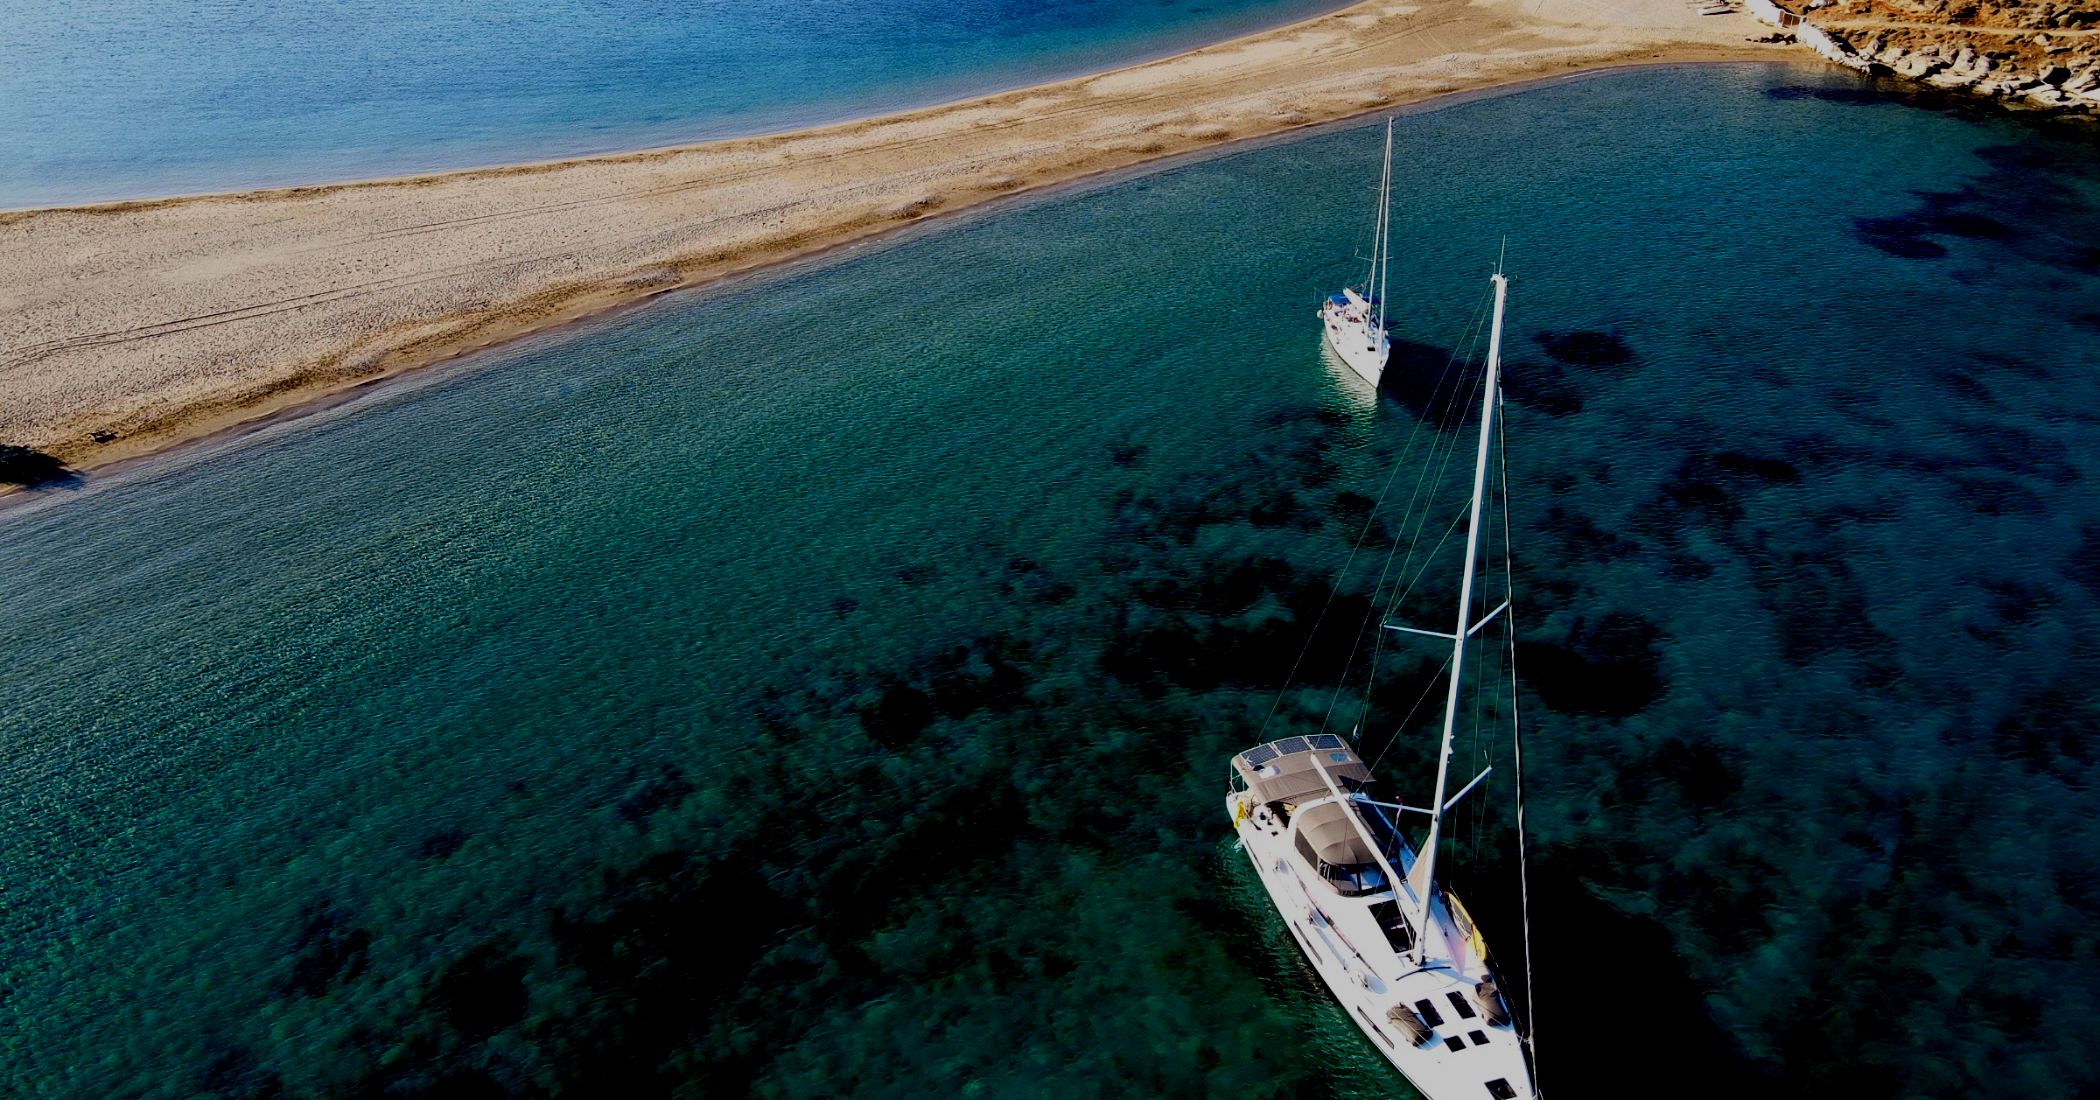 Athenian Yachts--Skippered Sailing Yachts & Catamarans
for Charter